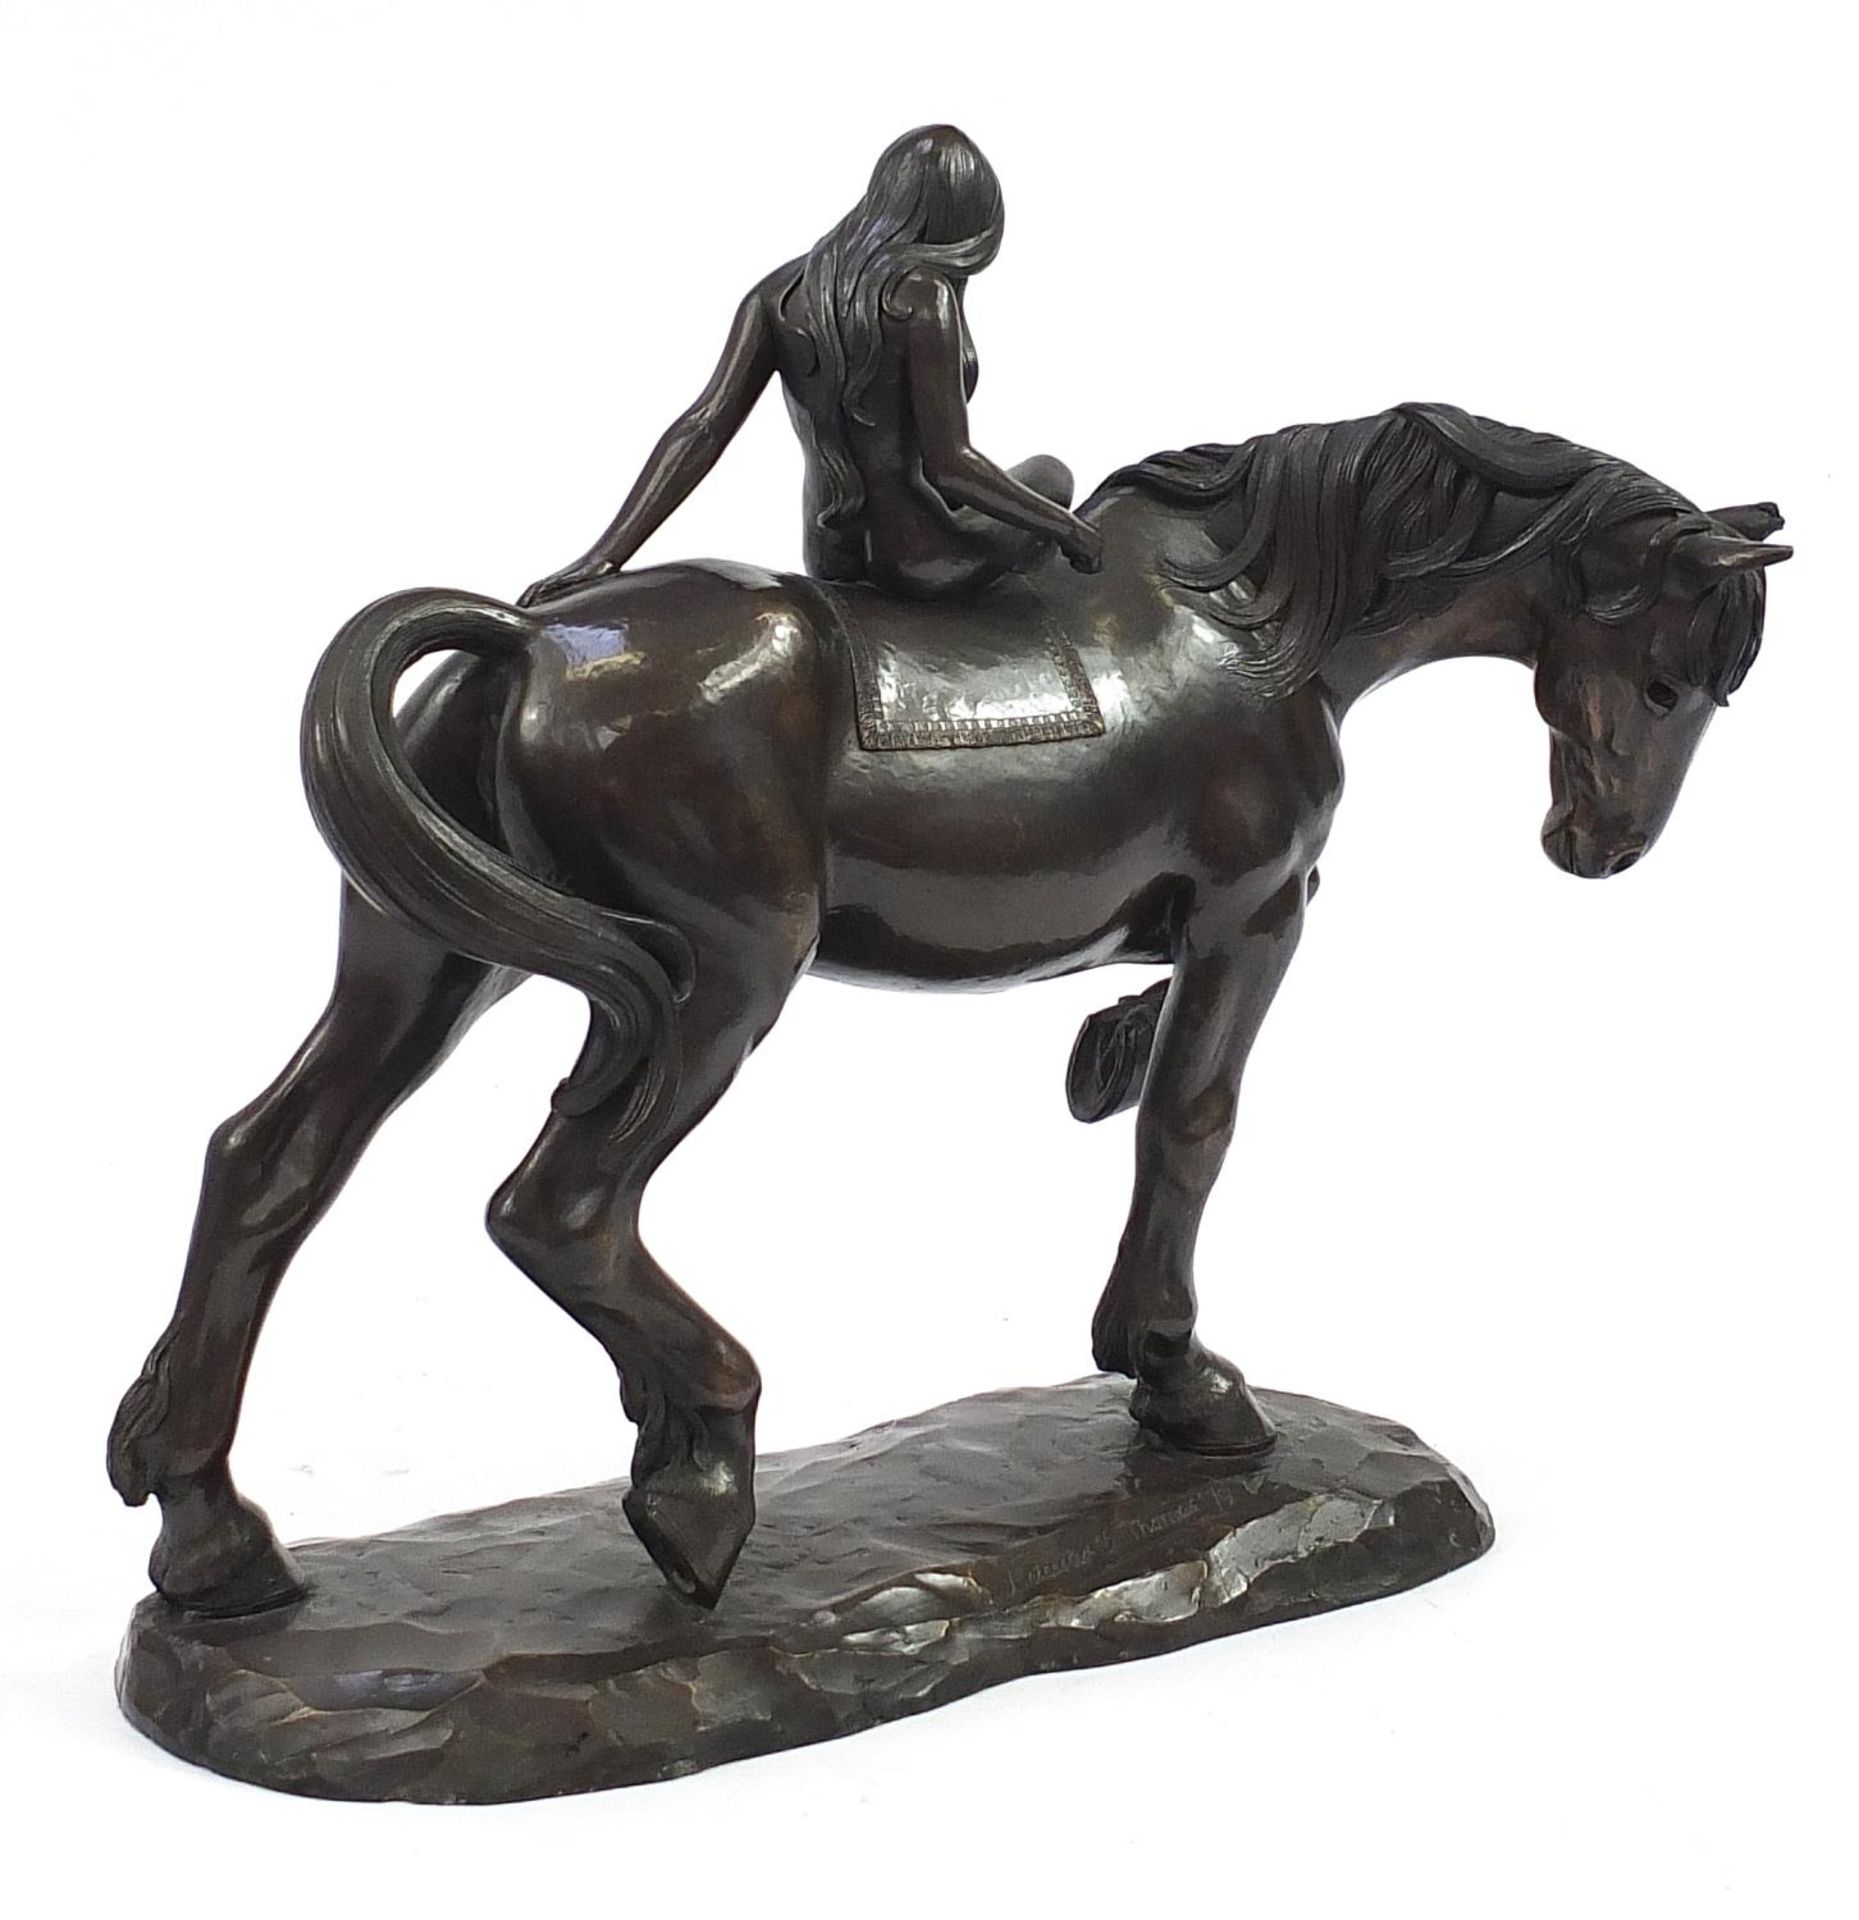 After Leicester C Thomas, large bronzed figure of Lady Godiva on horseback, 45cm in length - Image 2 of 4